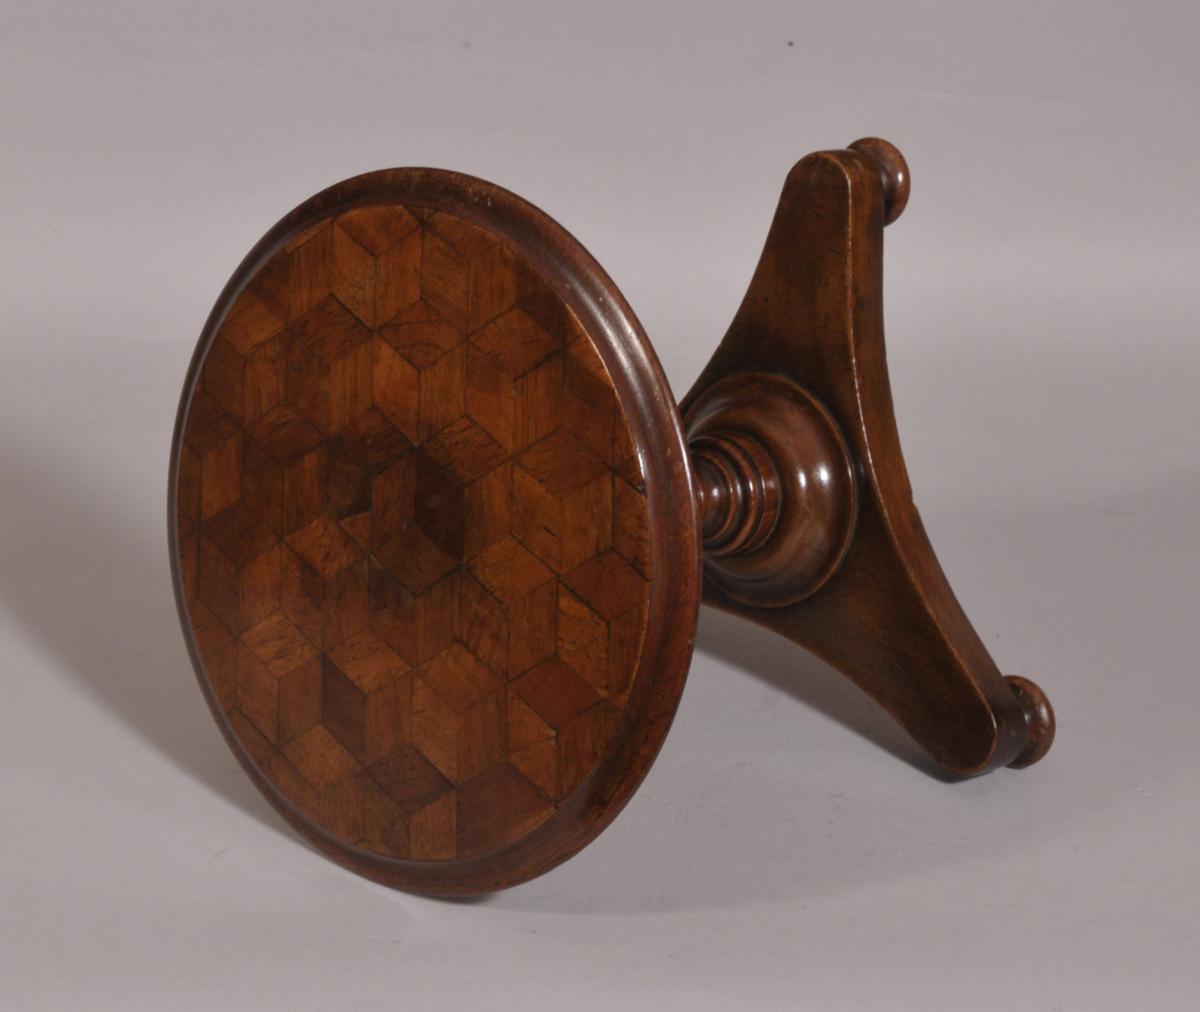 S/3882 Antique 19th Century Miniature Mahogany Table